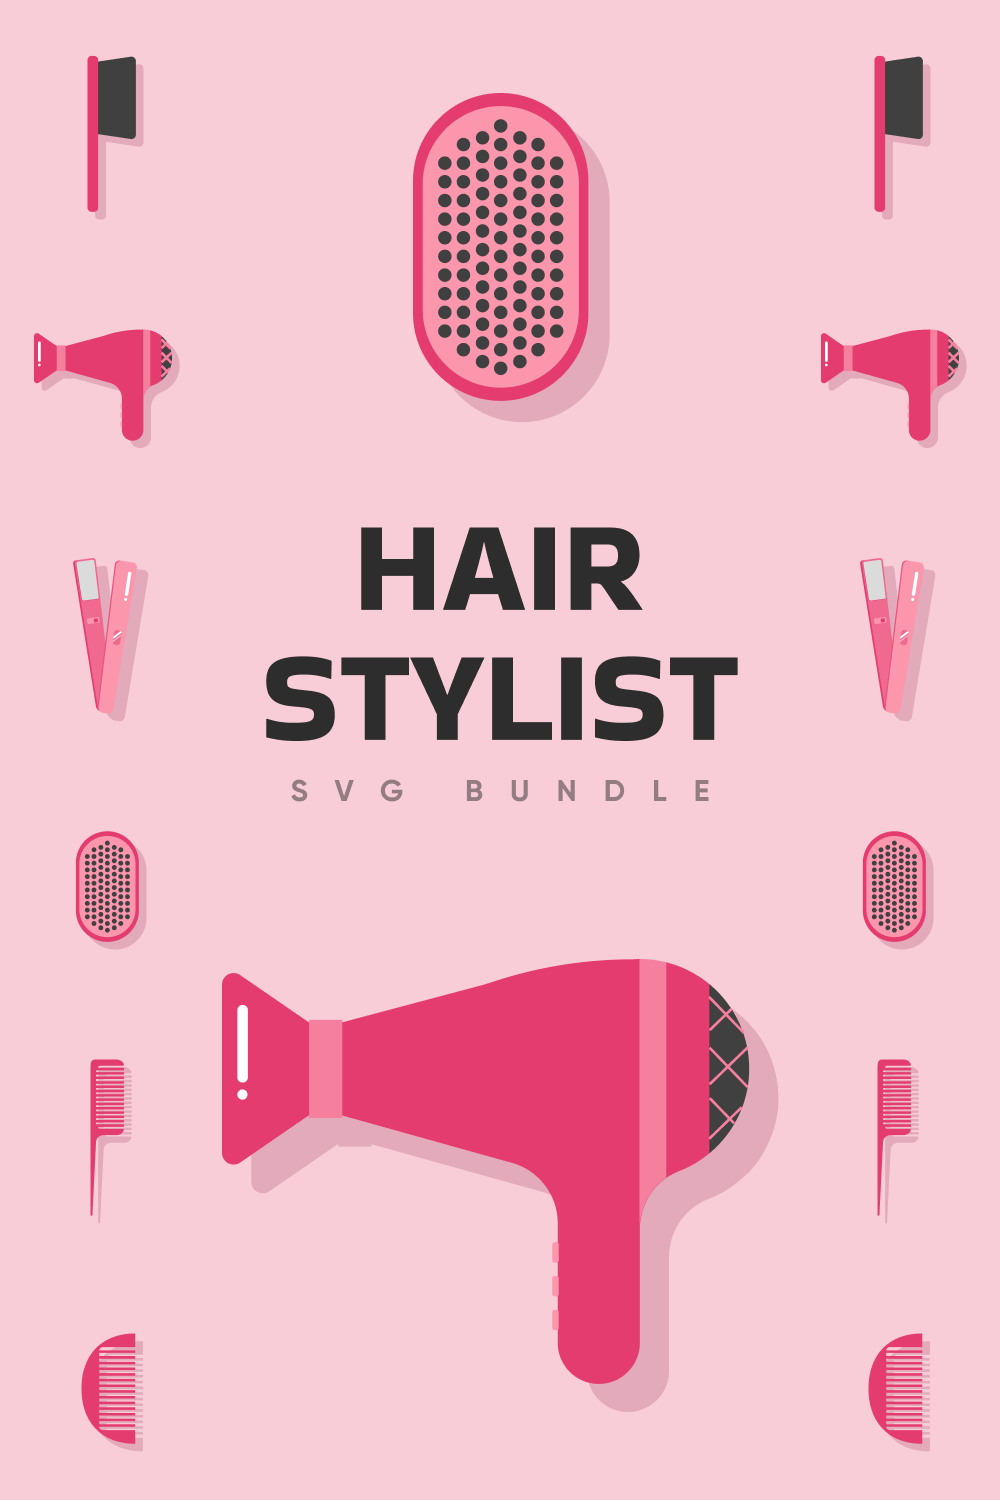 Hair stylist SVG bundle.